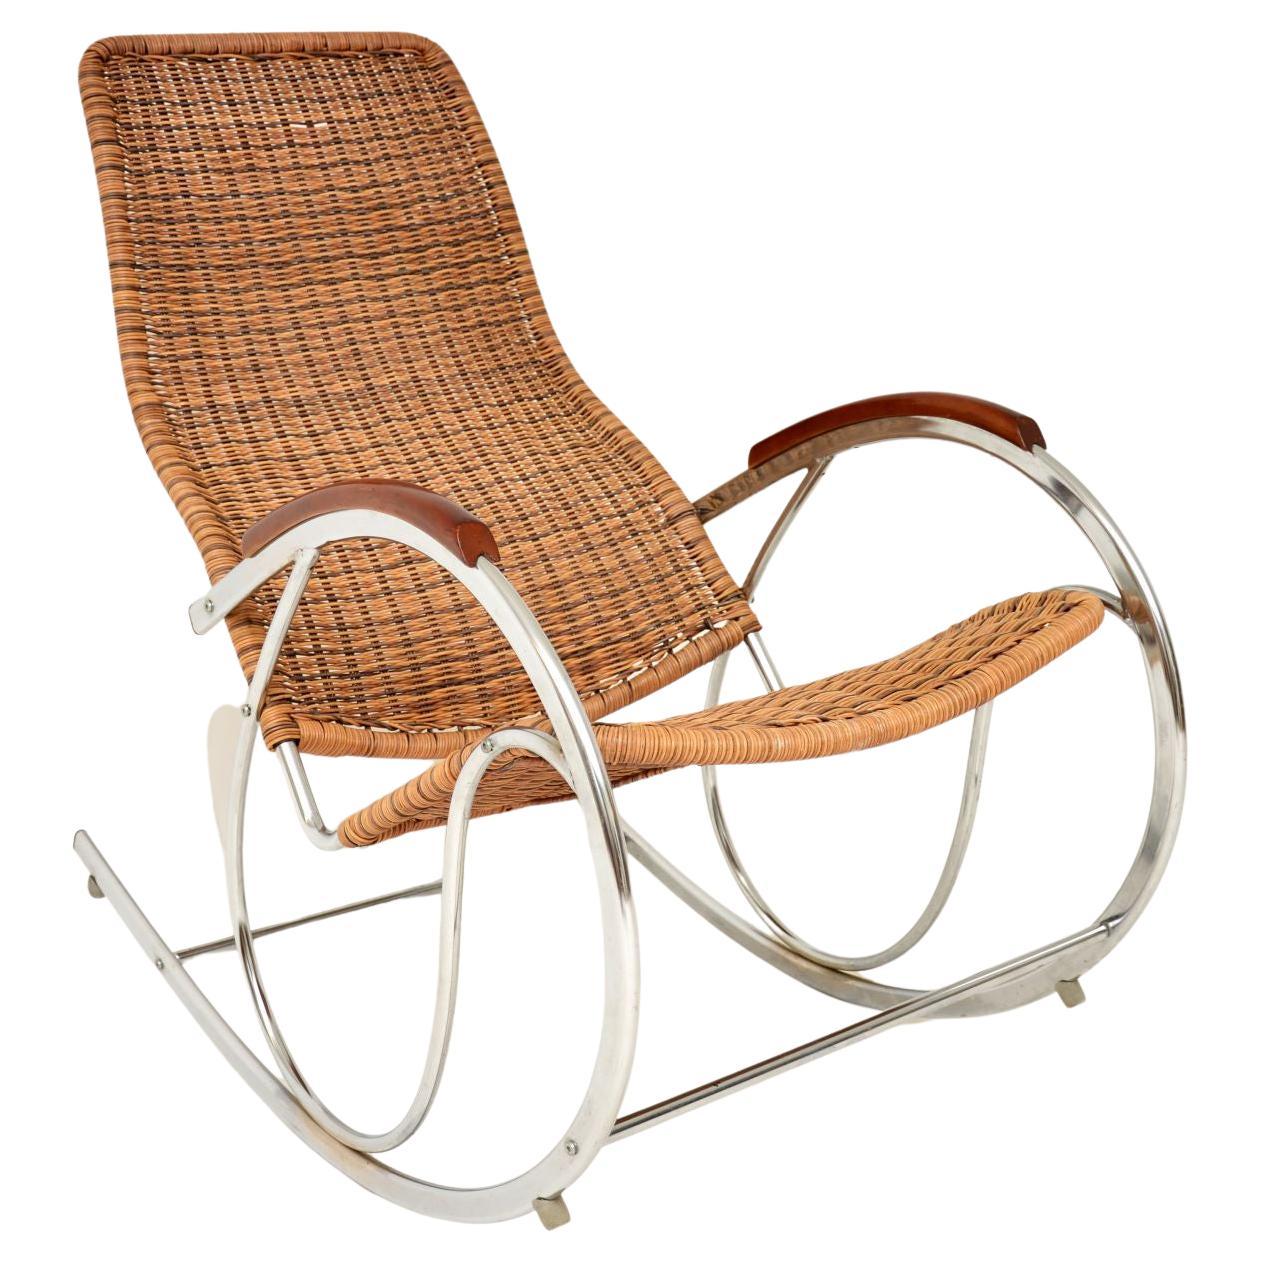 1970's Vintage Rattan & Chrome Rocking Chair